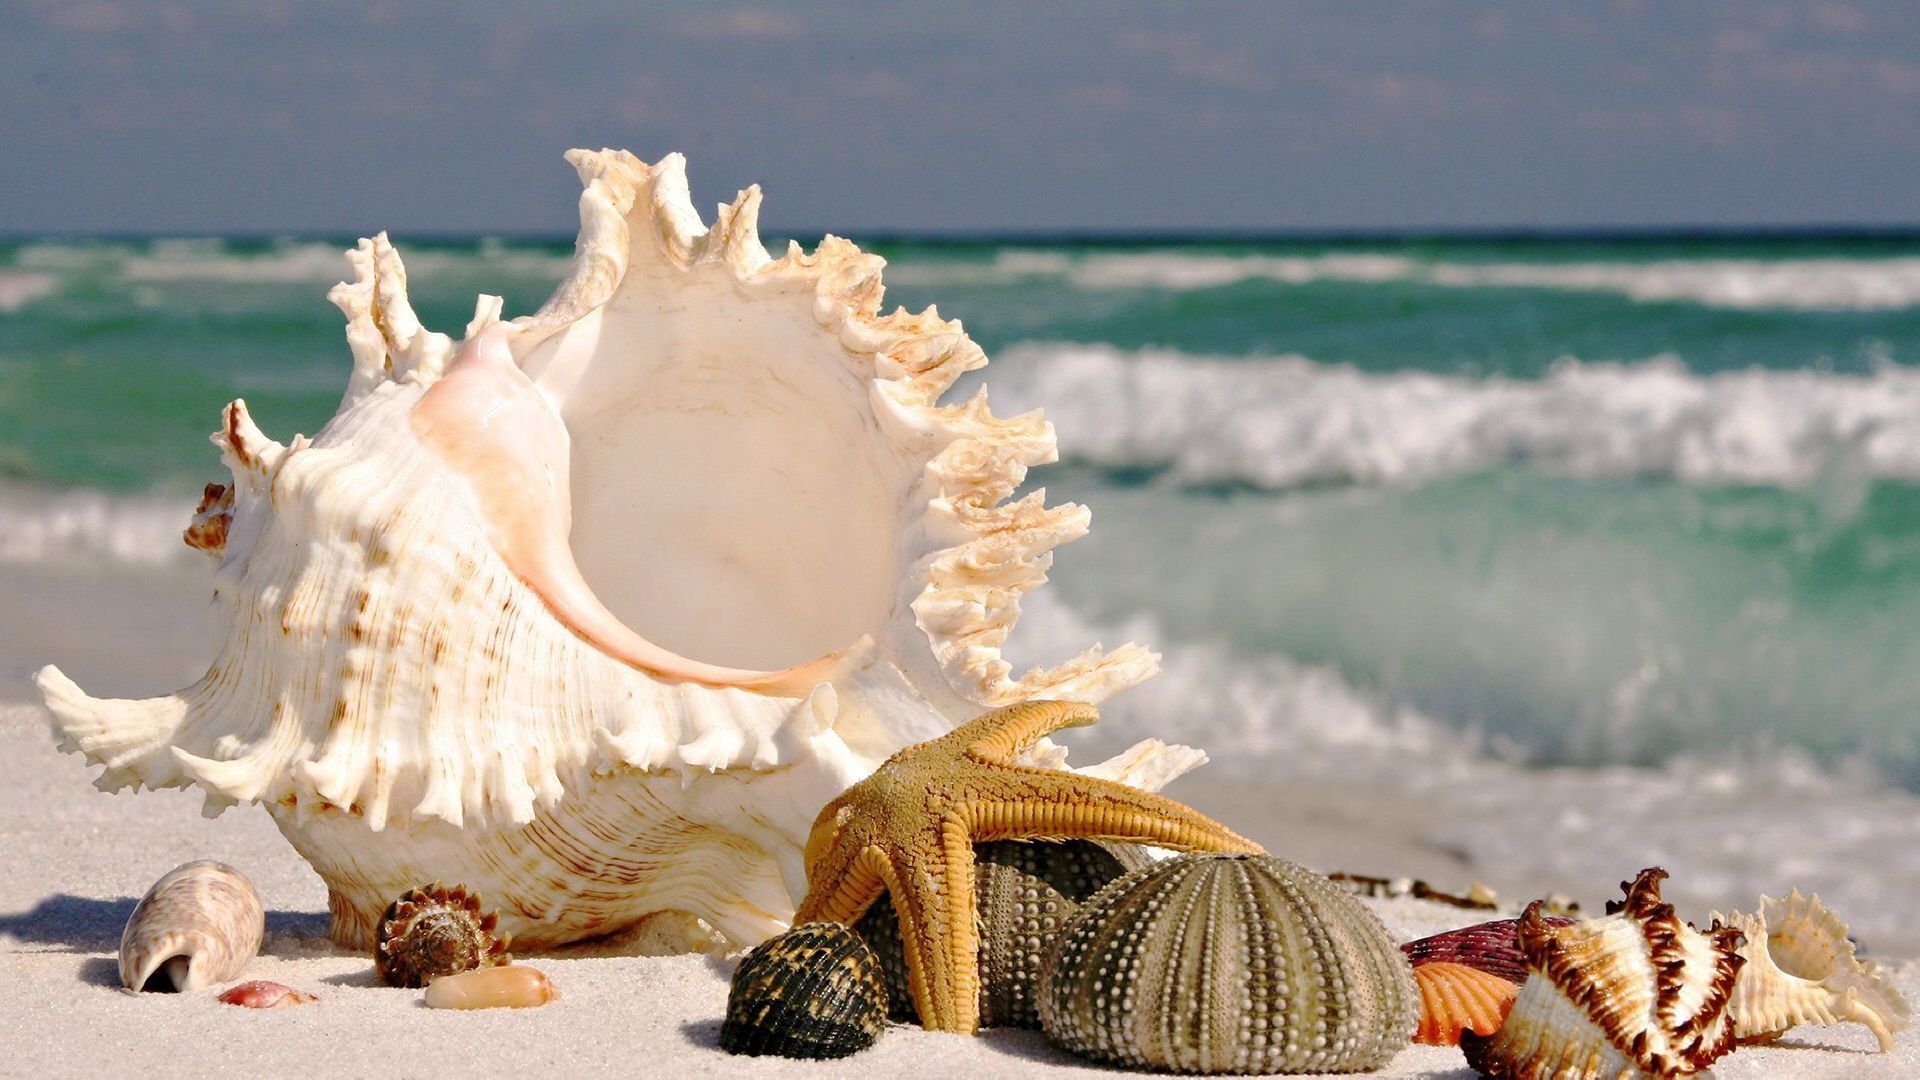 Best Live Wallpaper For PC. Sea shells, Shell beach, Seashell art